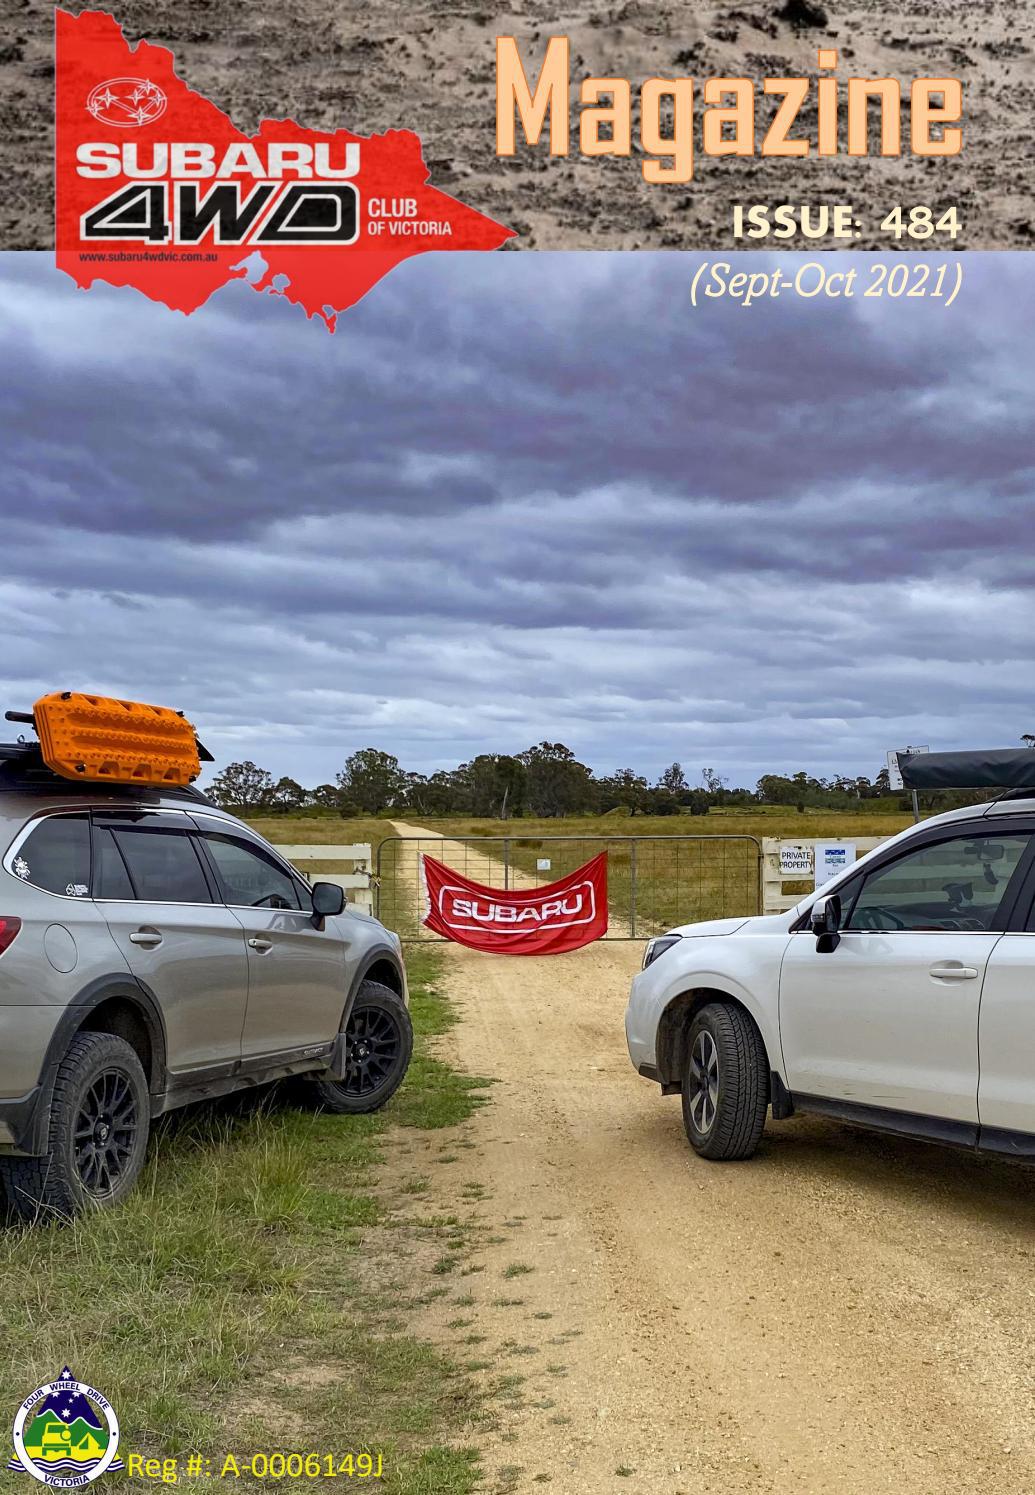 Subaru 4WD Club of Victoria magazine - October 2021